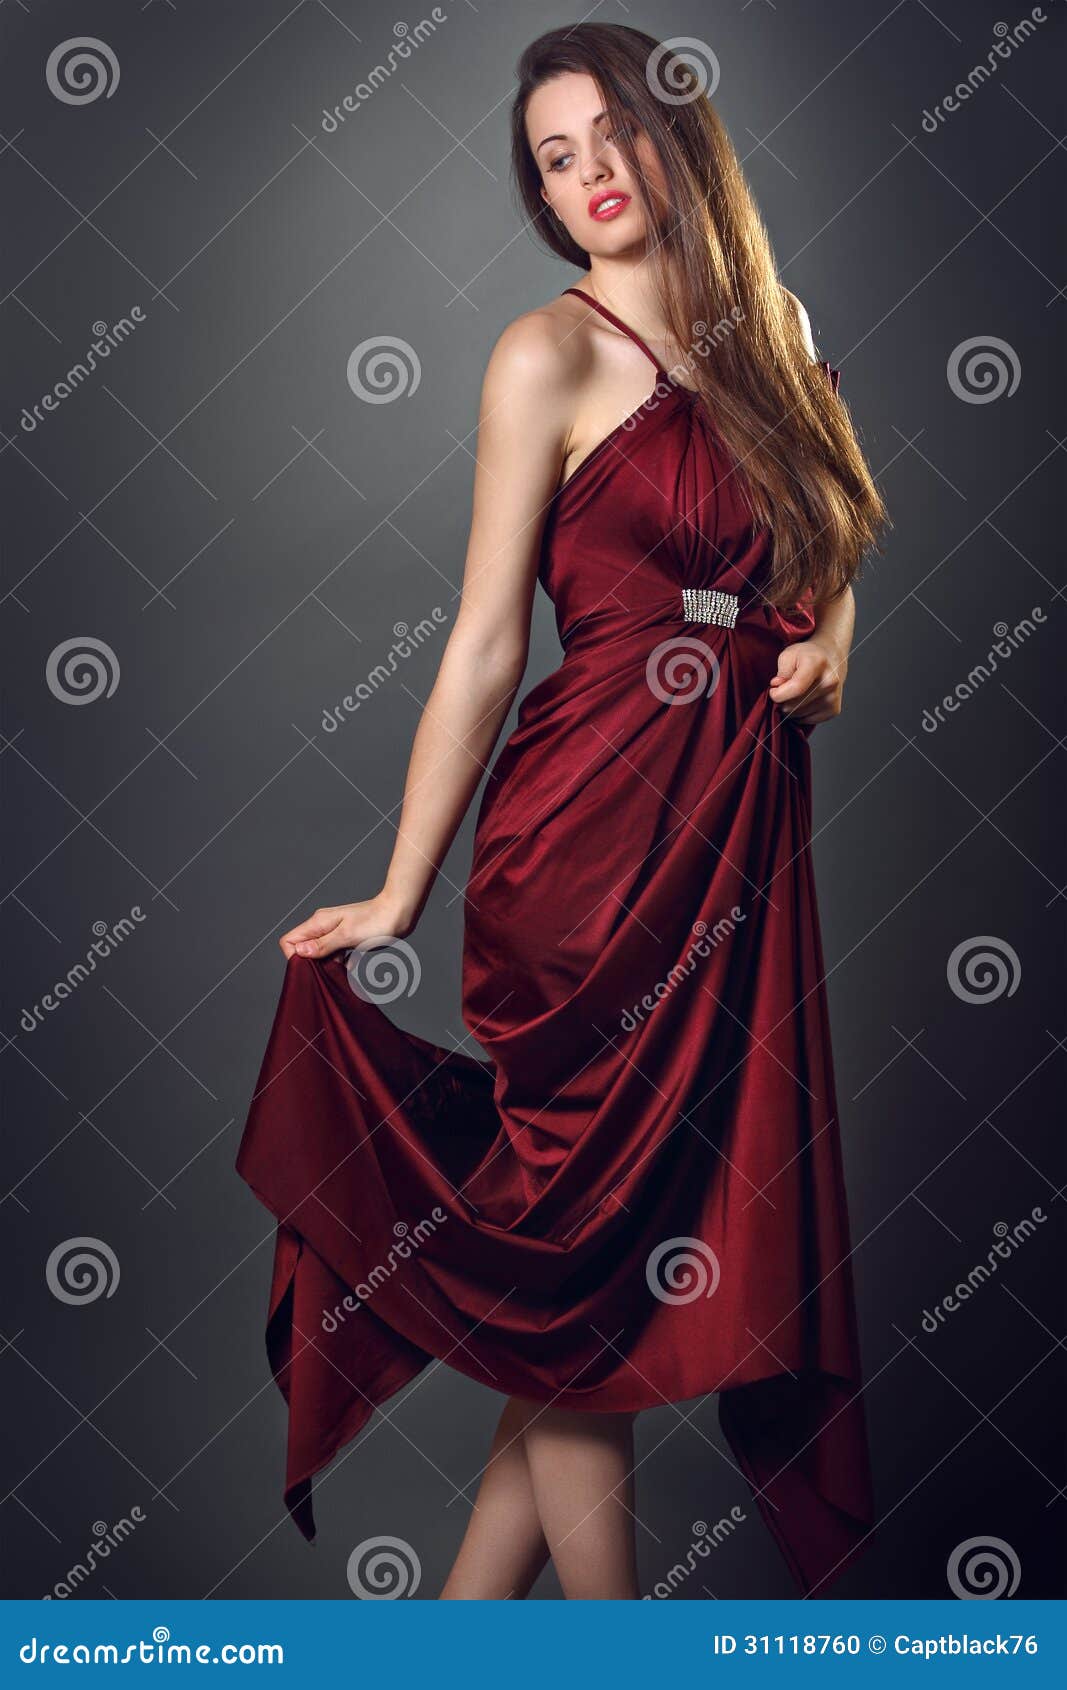 Modelo Moda Elegante Presenta El Vestido Rojo De La Seda Foto de archivo - Imagen de retrato, 31118760